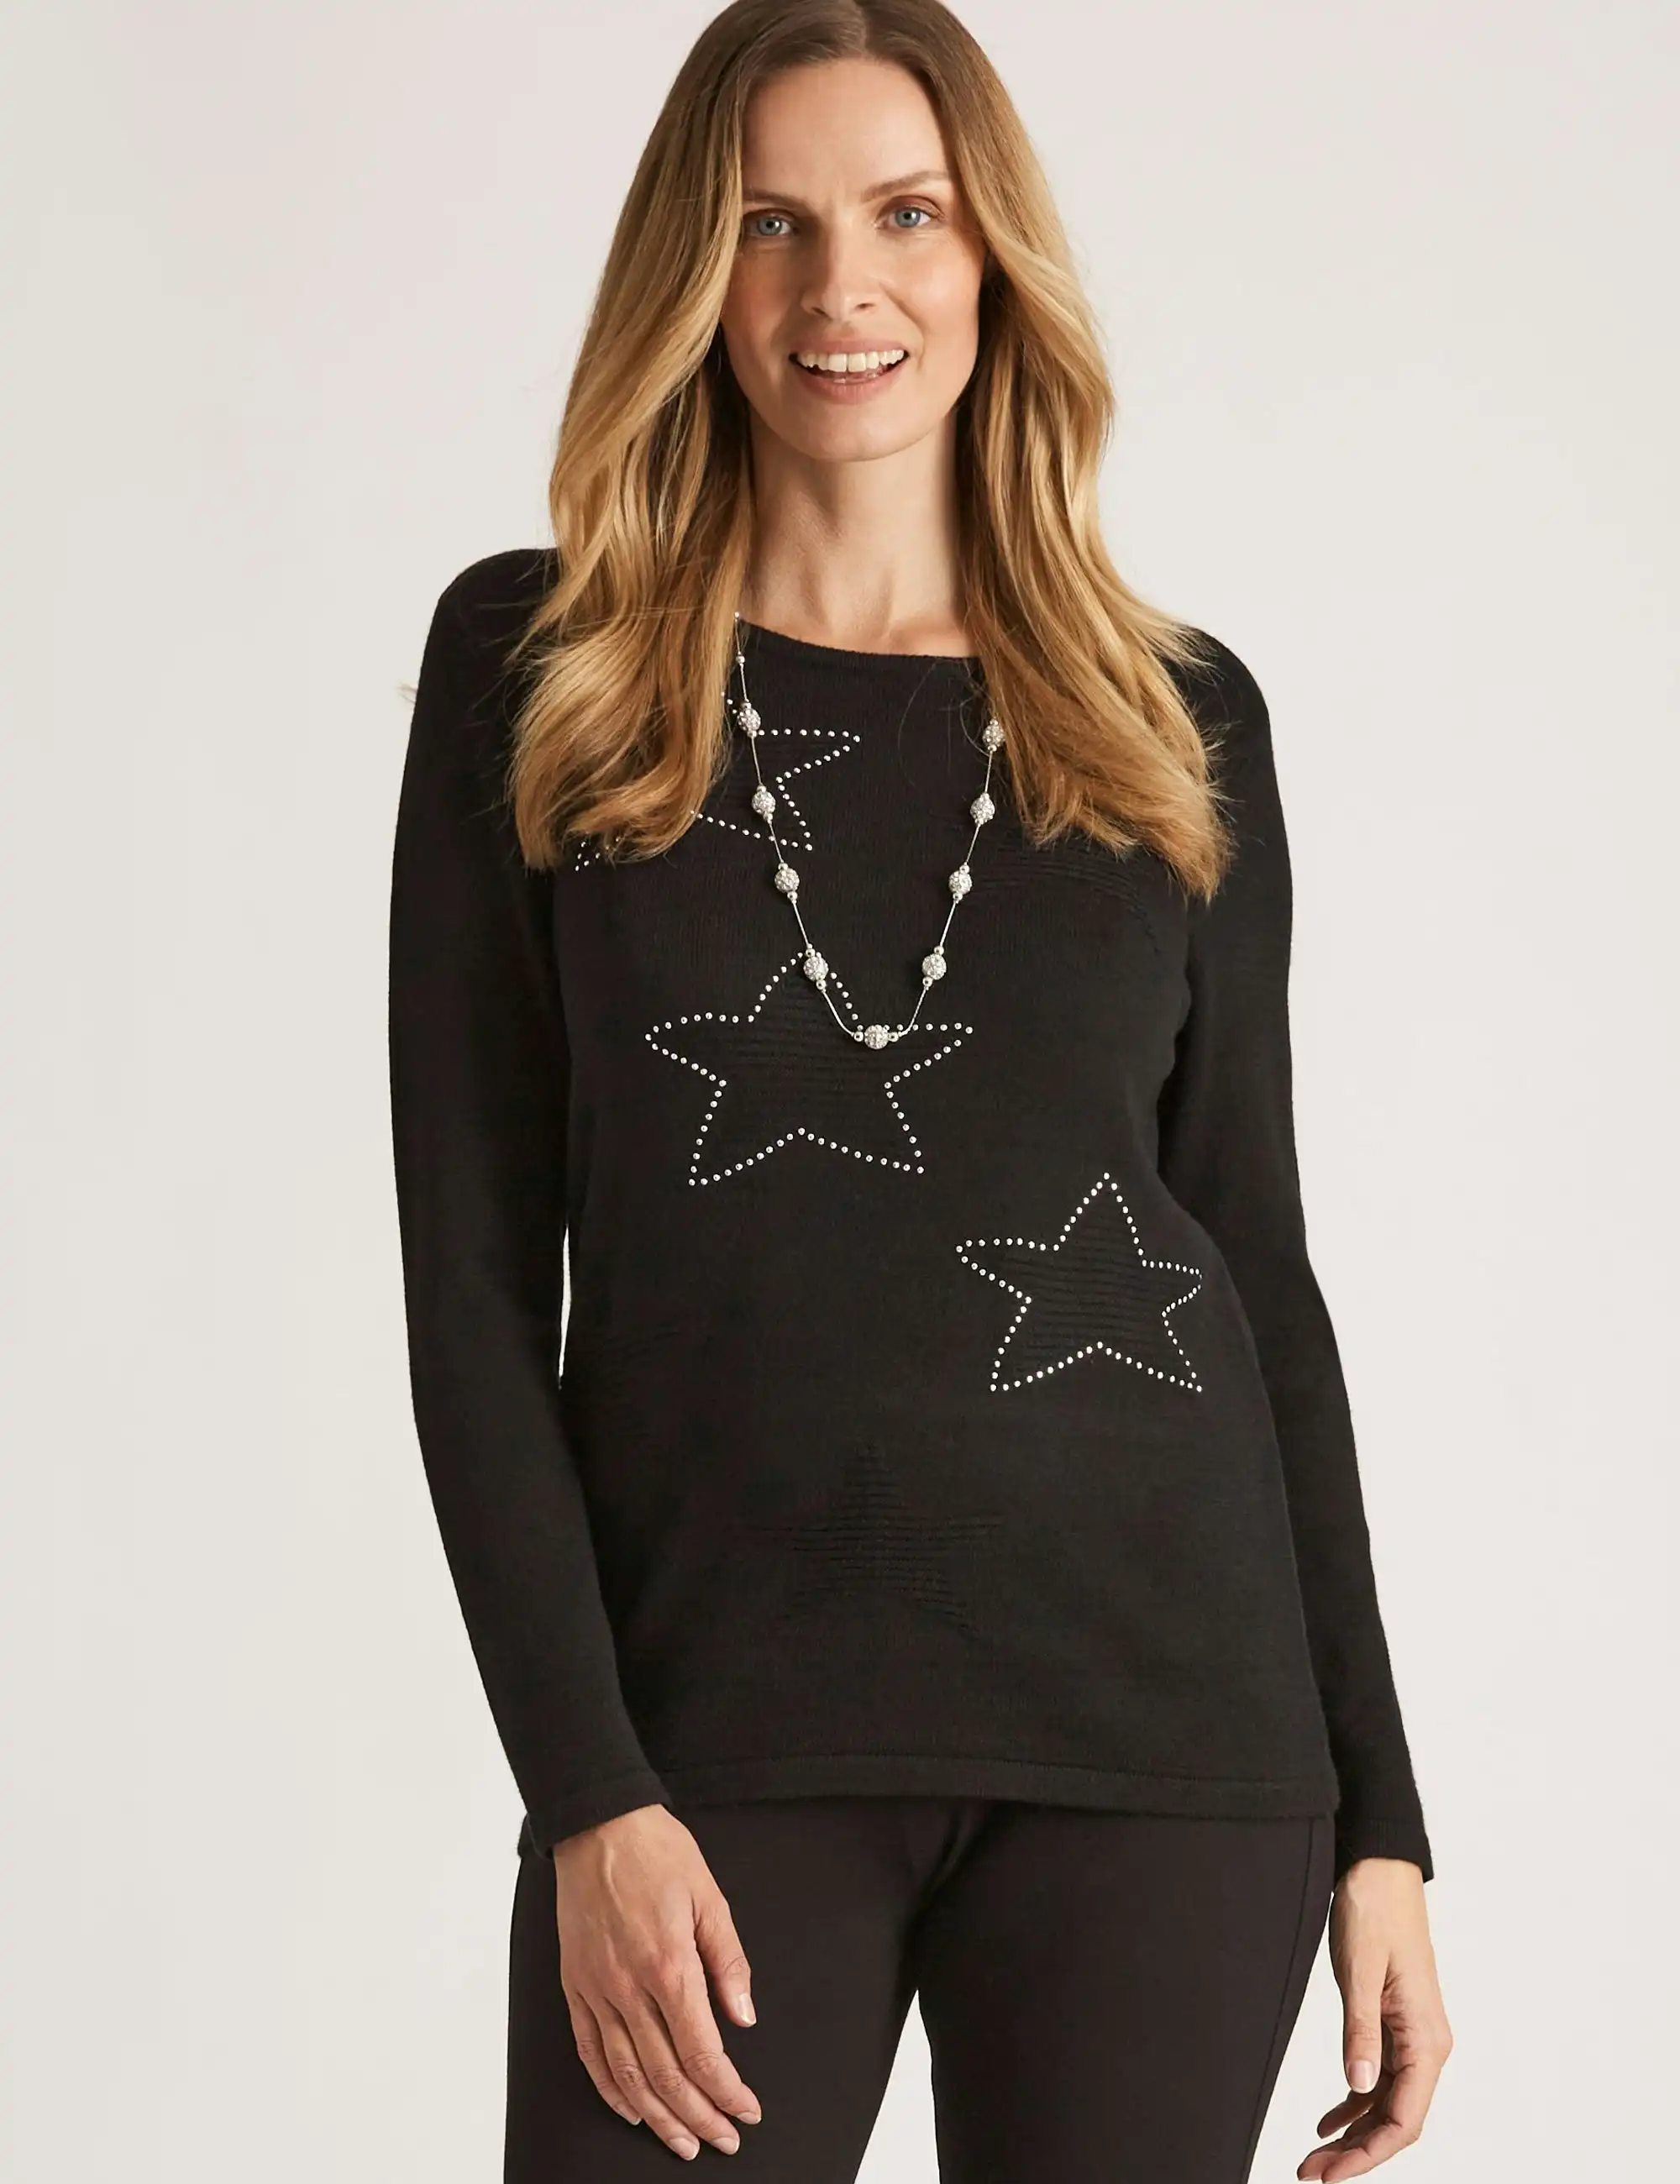 Noni B Star Embellished Knitwear Top (Black)